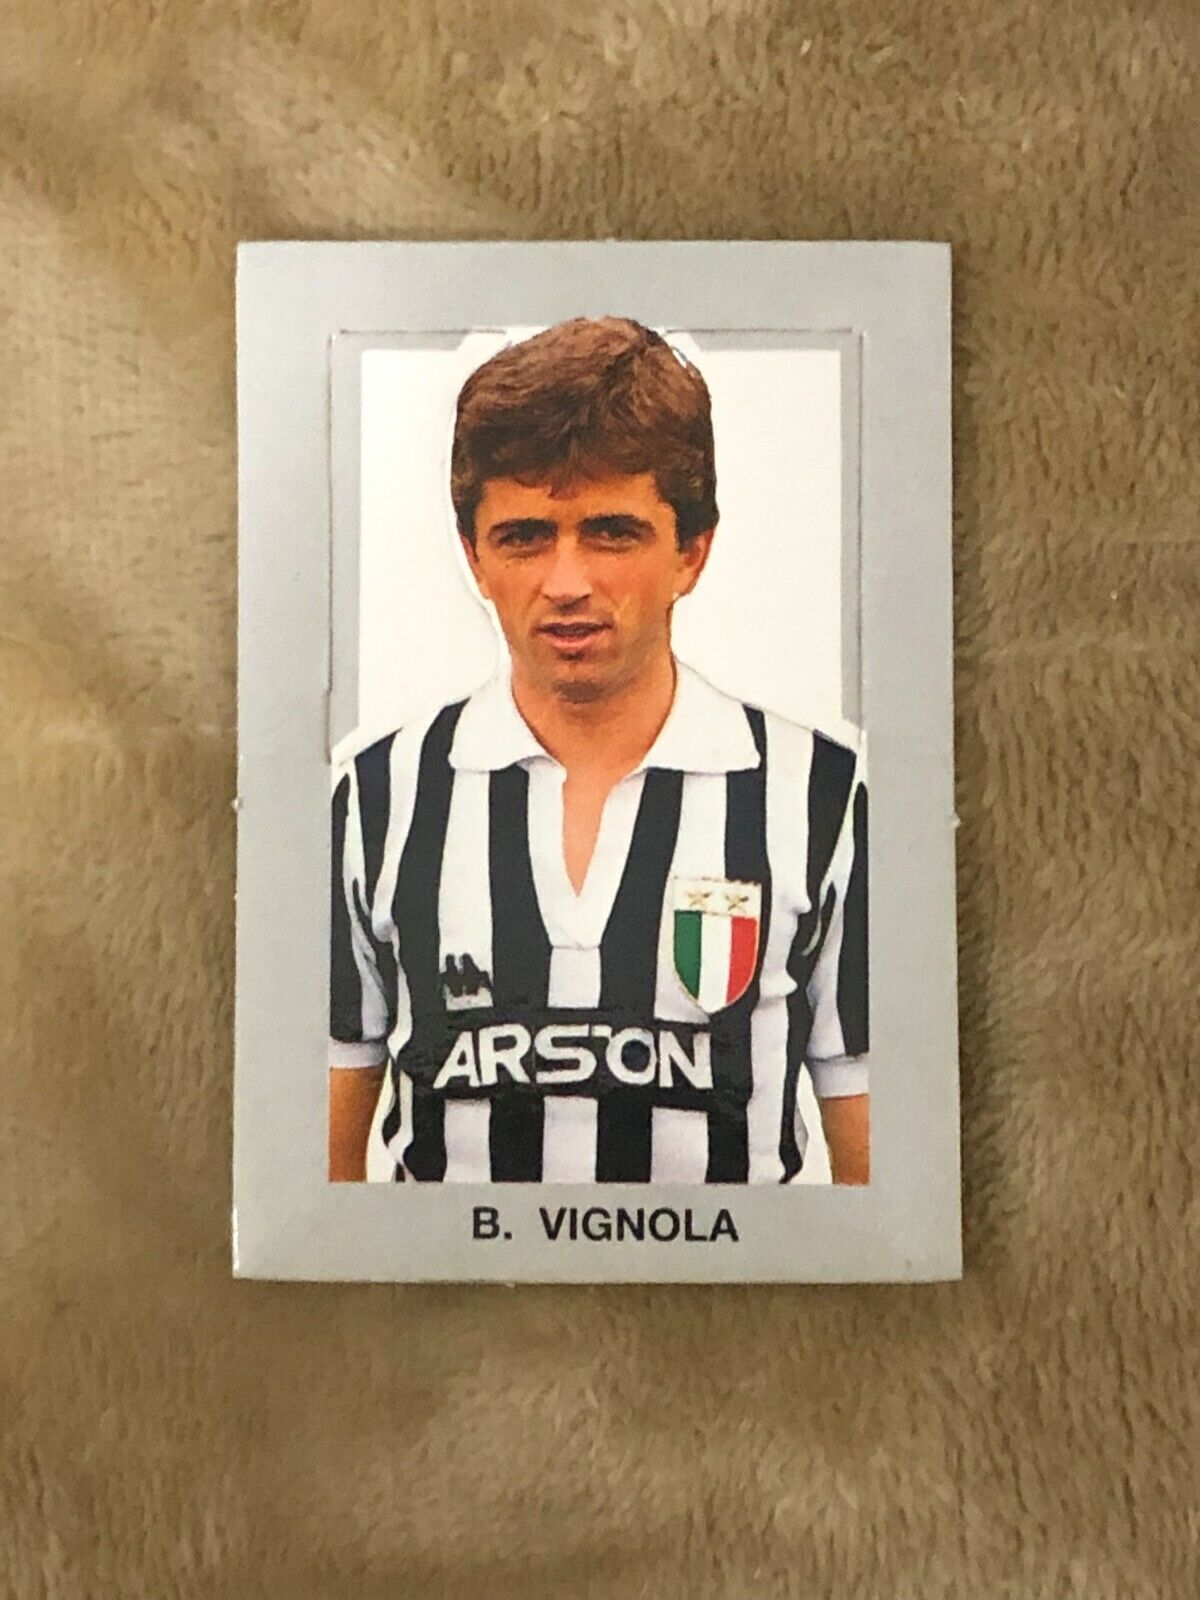 Figurina fustellata B. Vignola Juventus sorpresa patatine anni 80 di Aa.vv.,  19